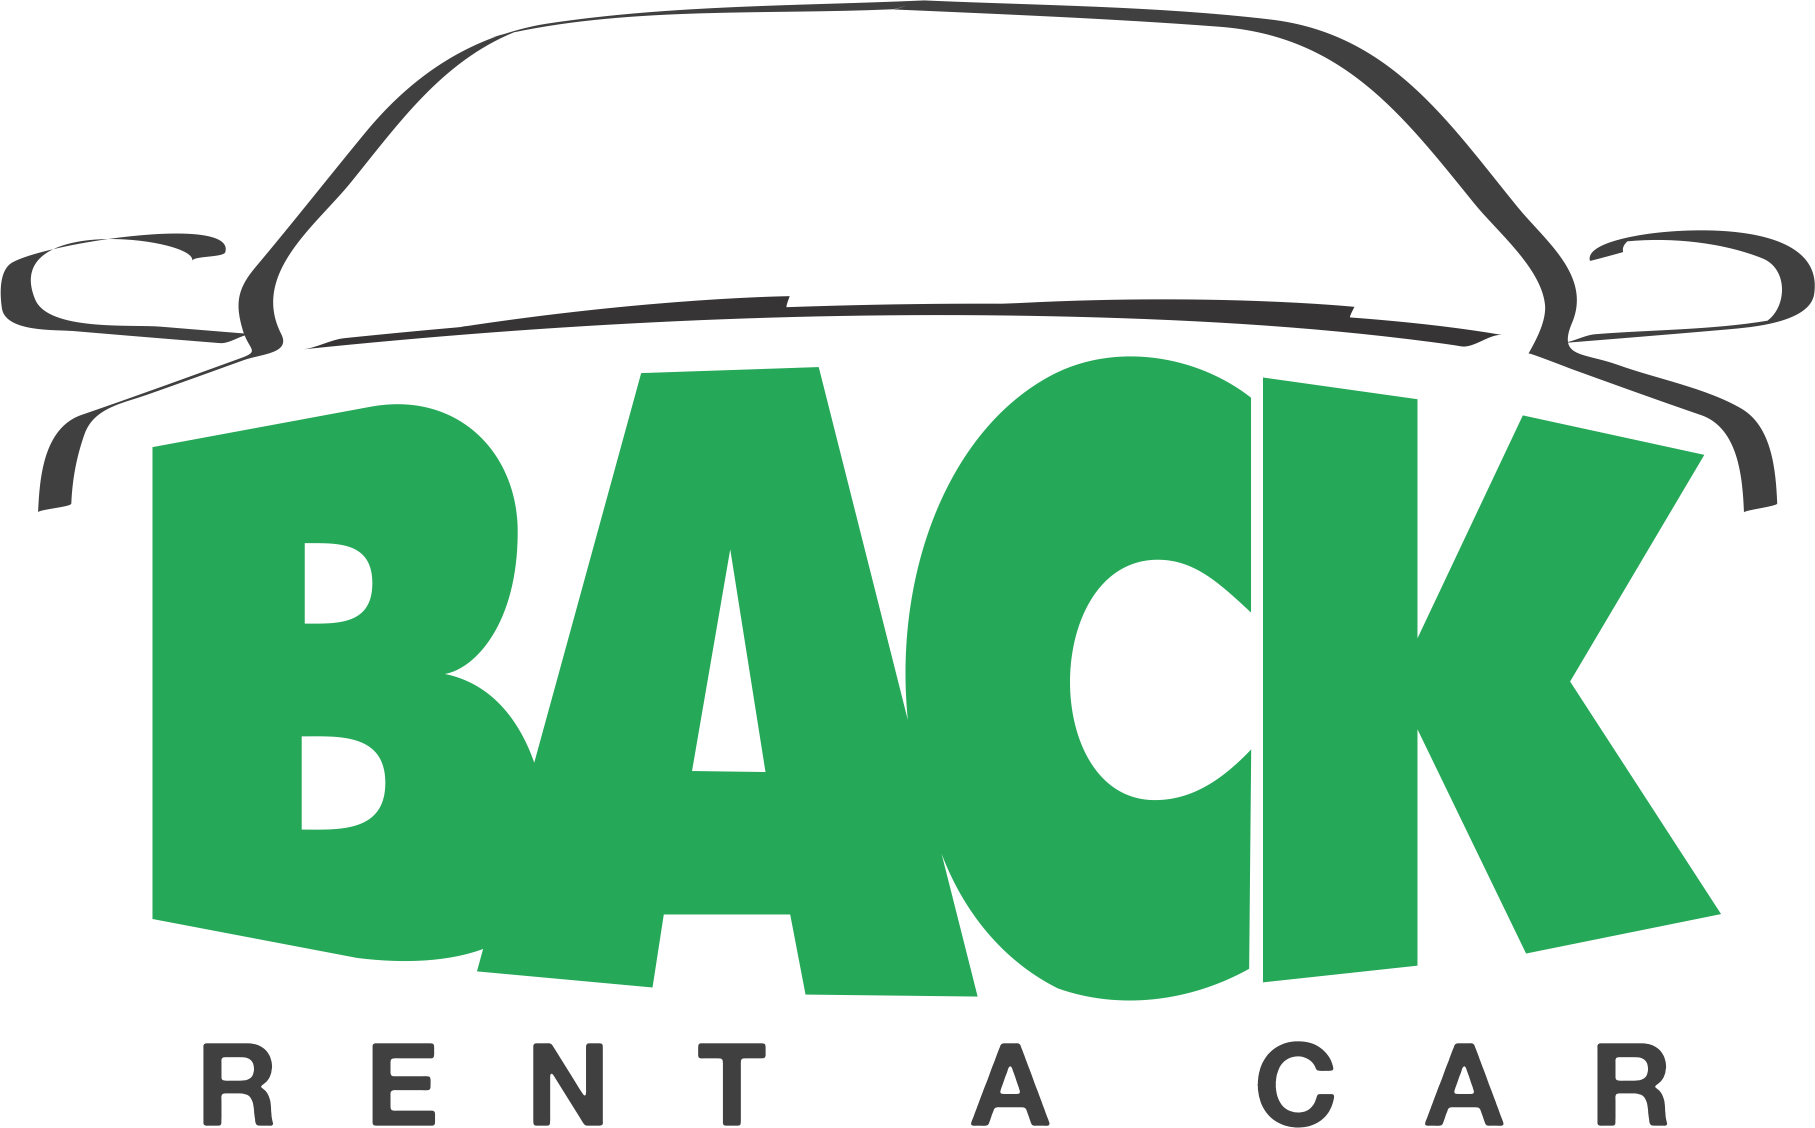 Back Rent a Car logo